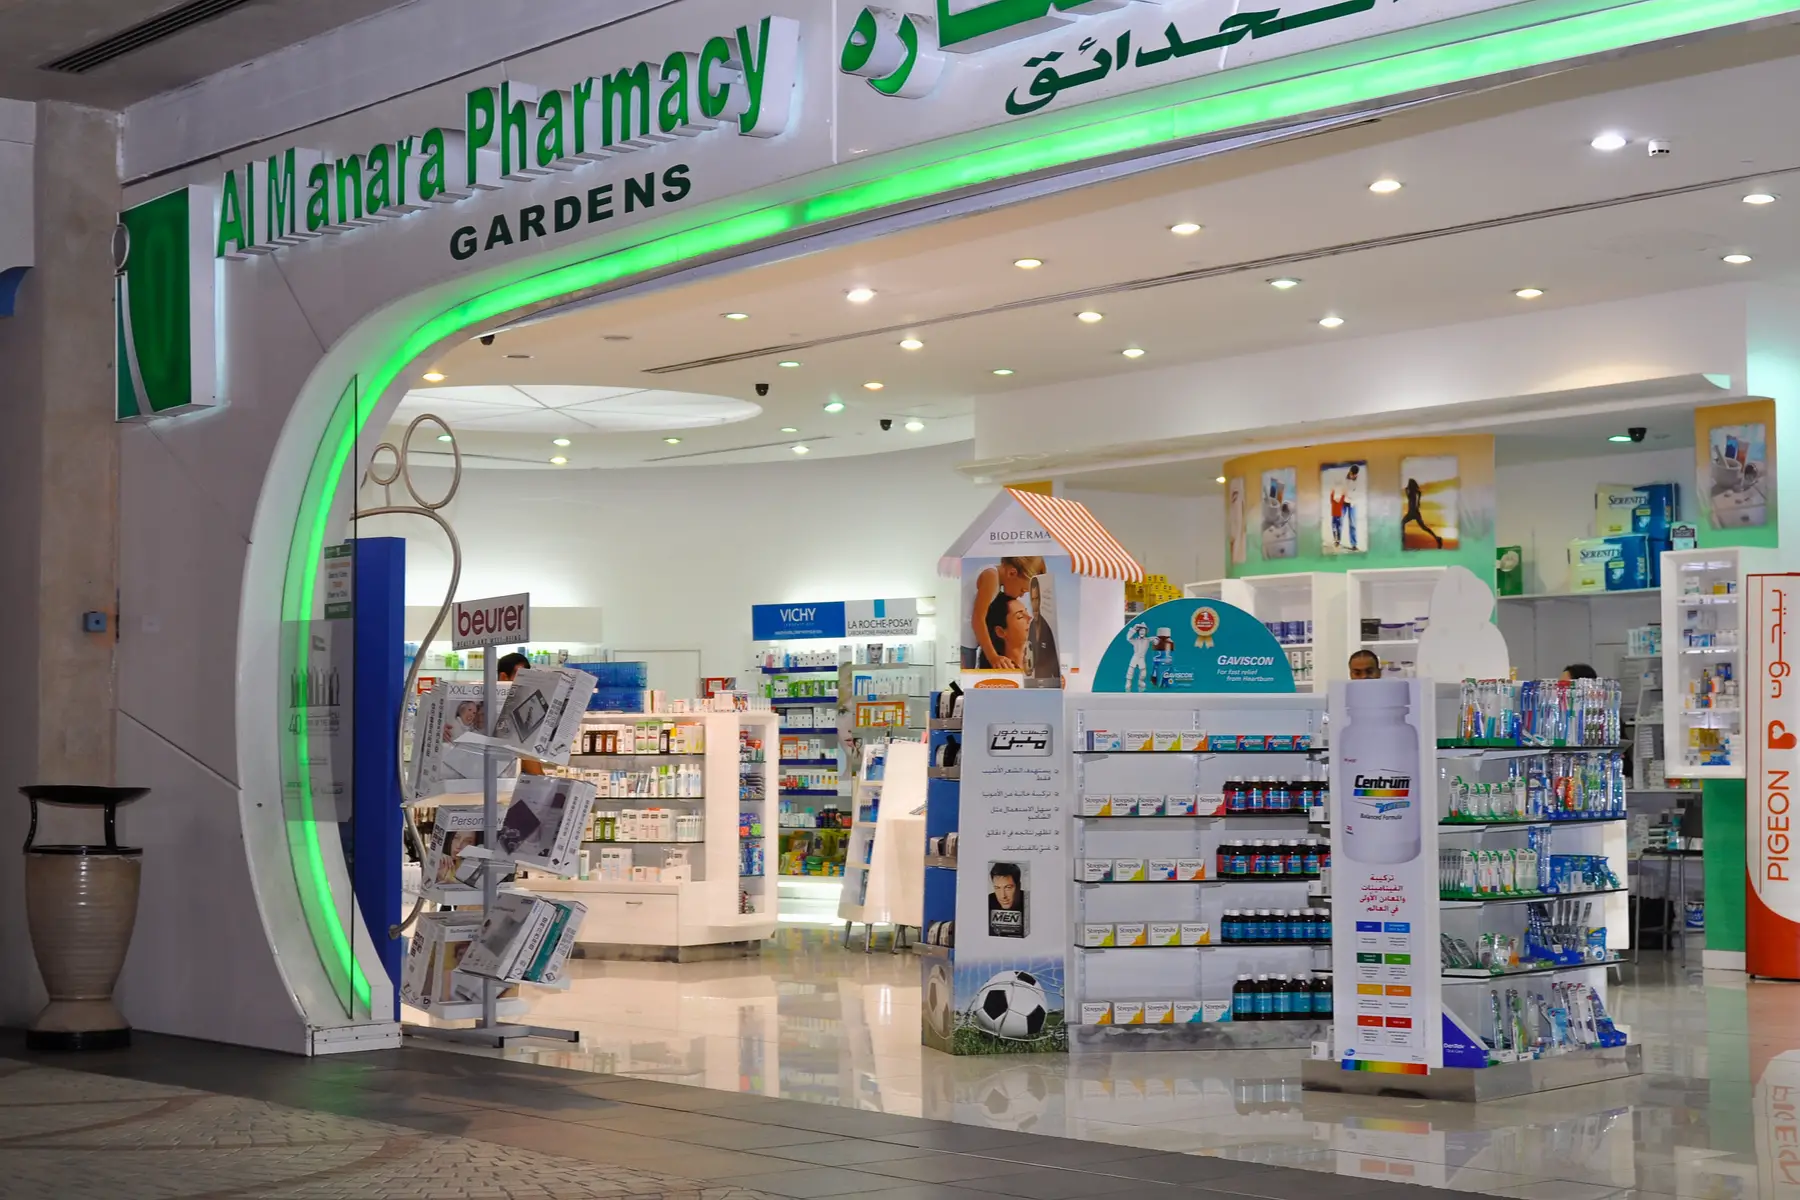 al manara pharmacy in ibn battuta mall, dubai